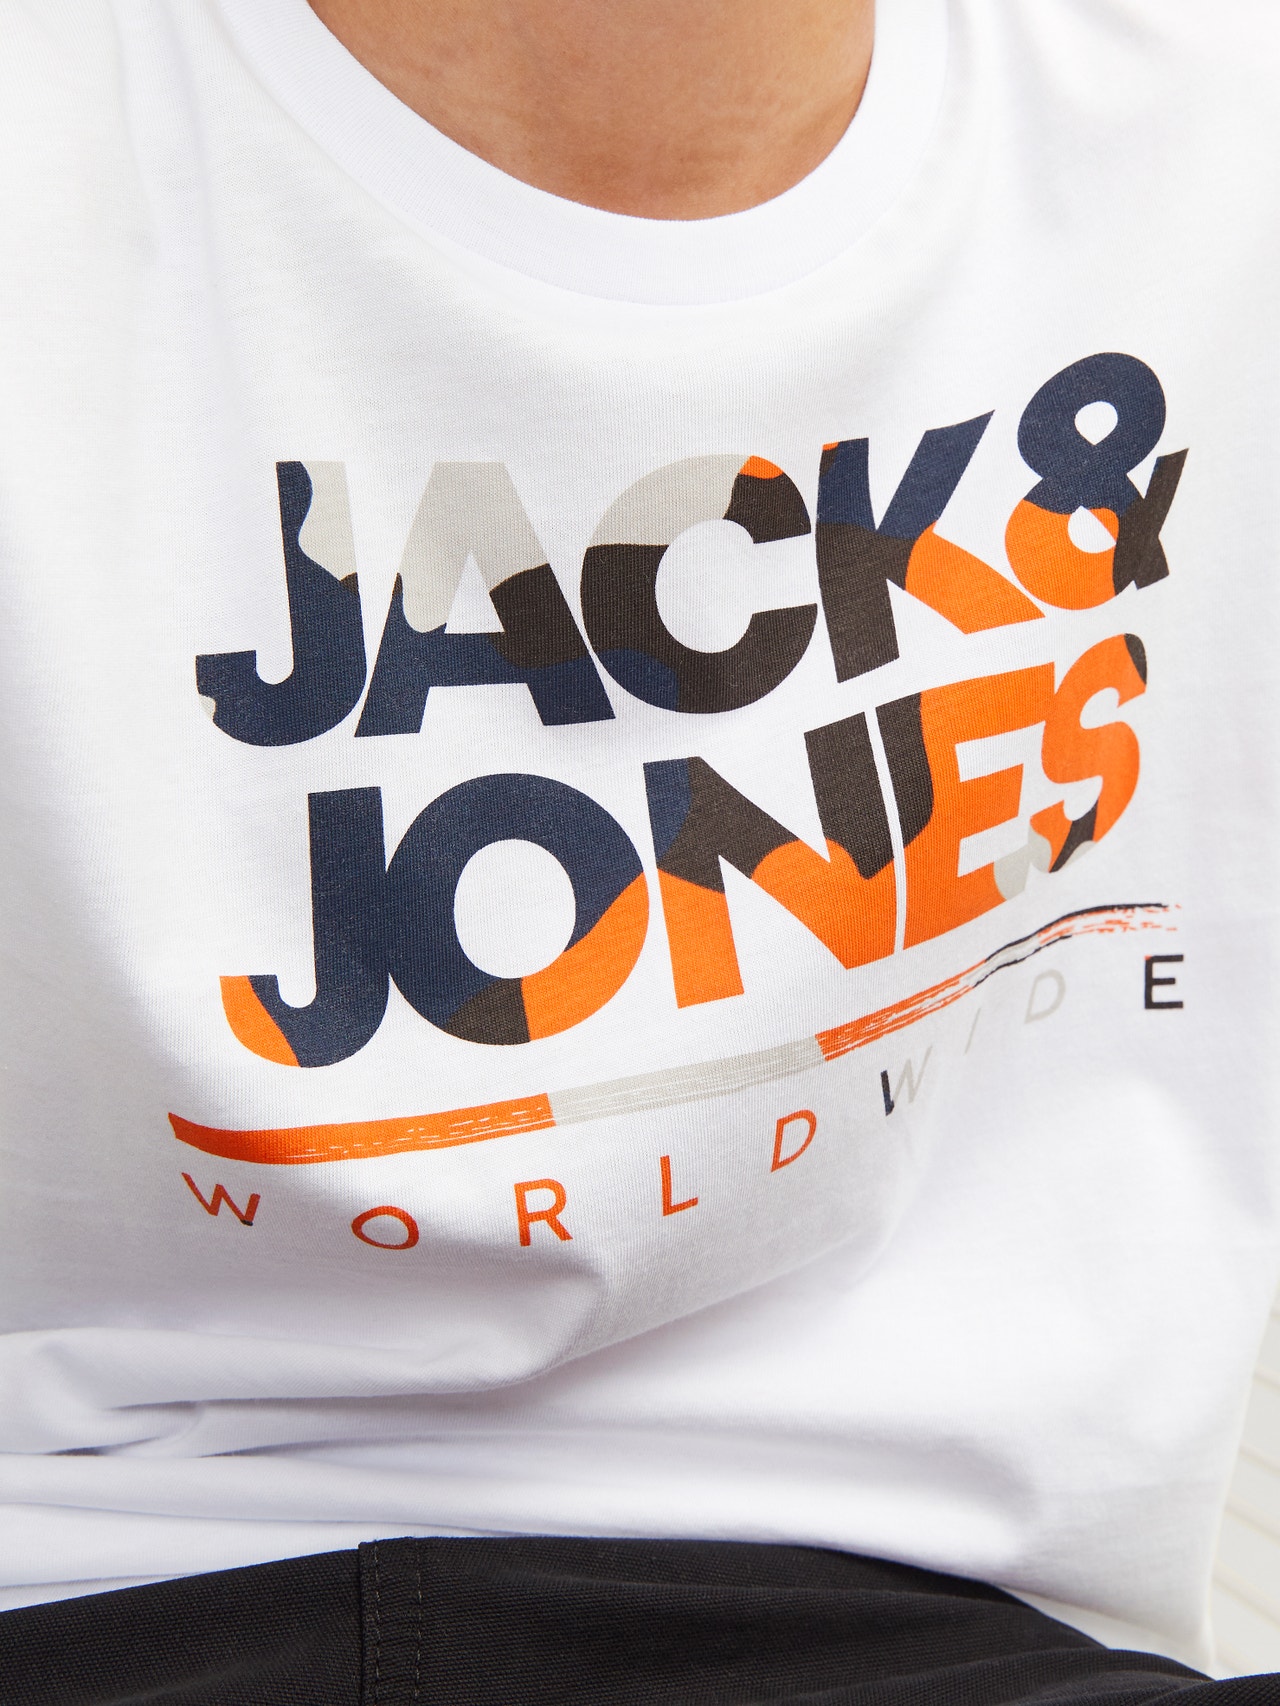 Jack & Jones Camiseta Logotipo Bebés -White - 12259499